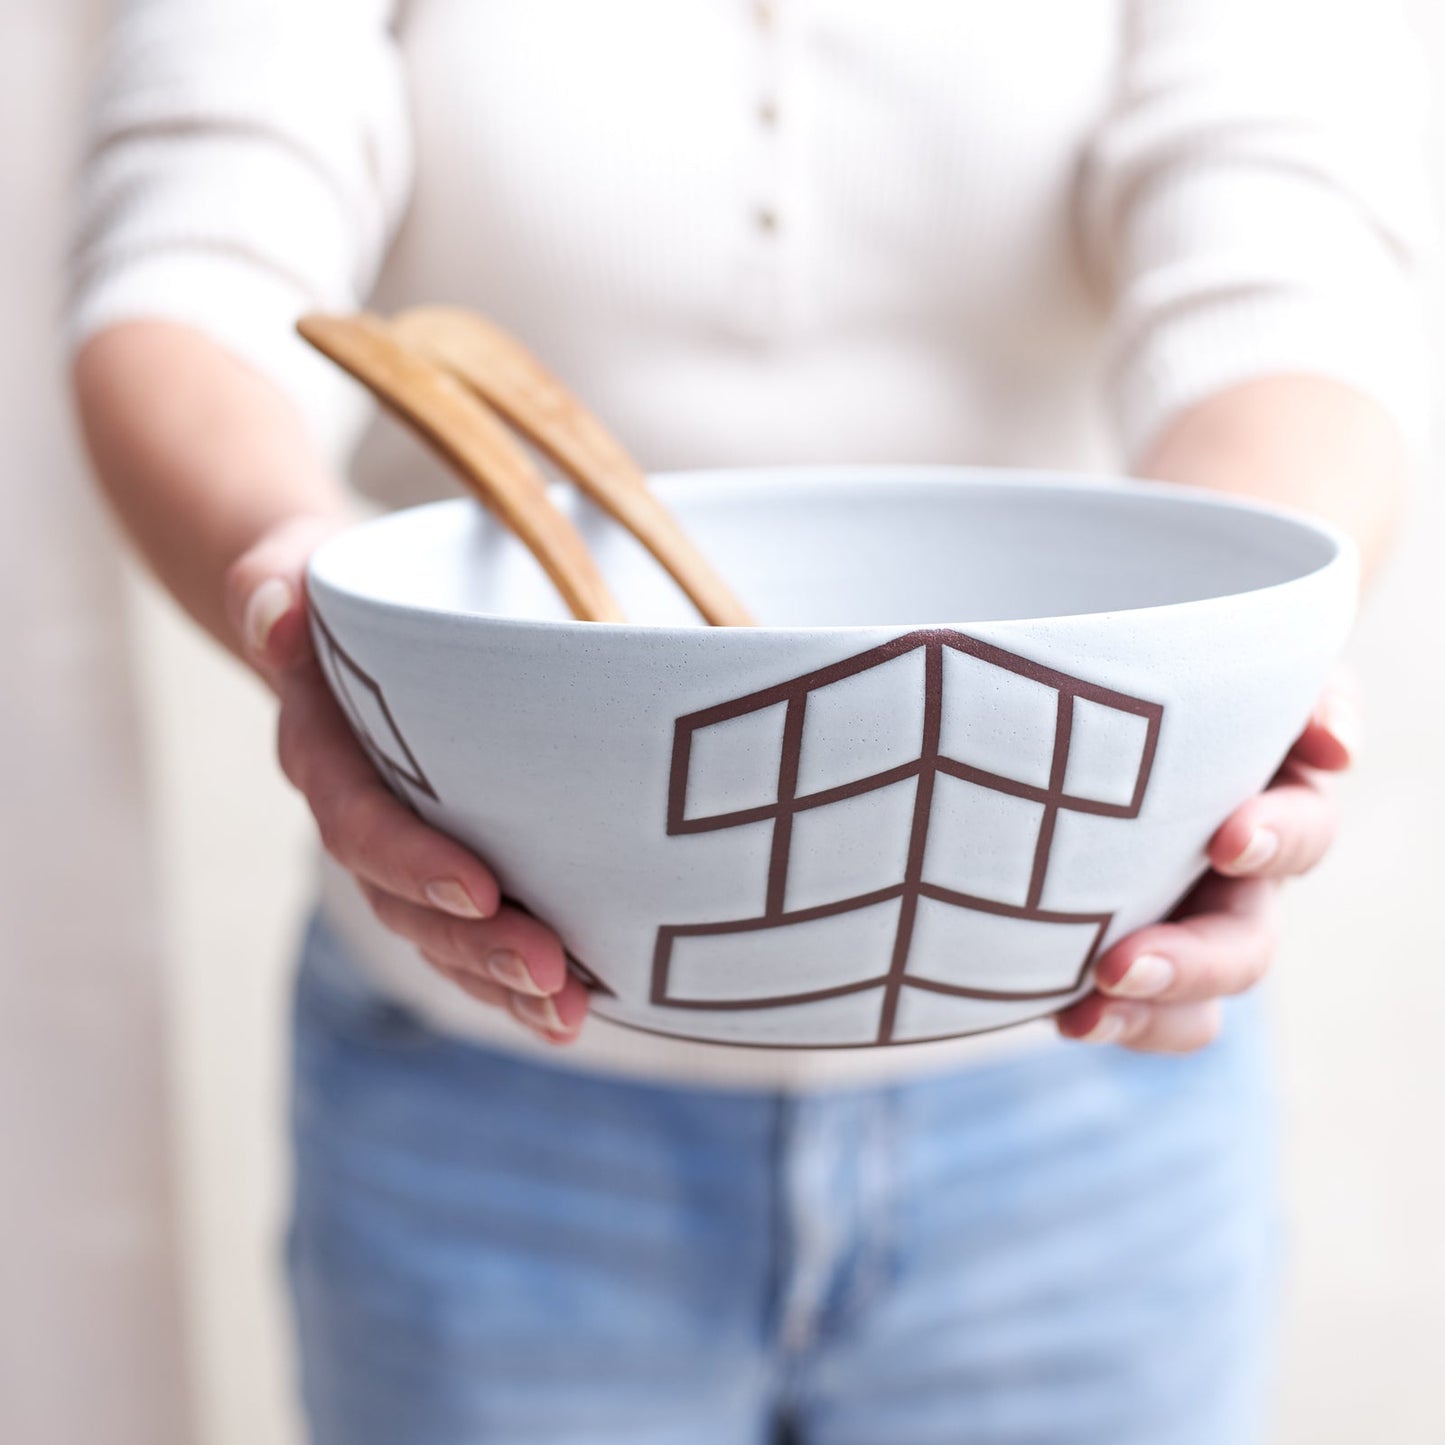 Geometric Handmade Ceramic Bowl - White and Mahogany - Second